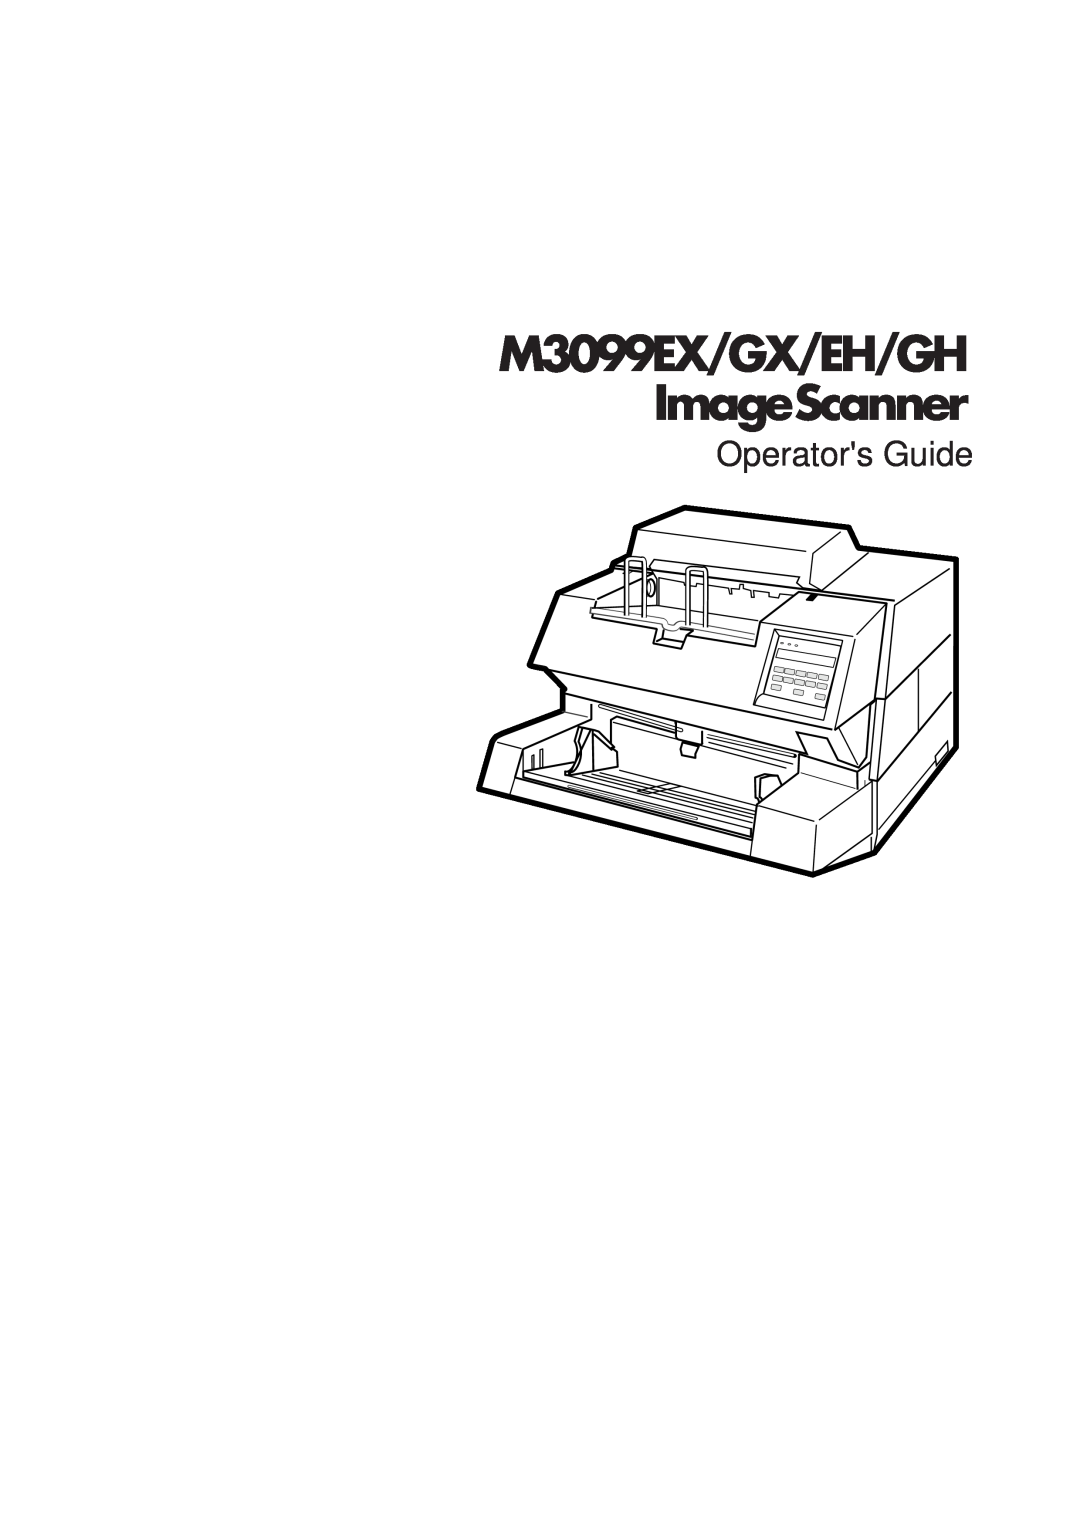 Fujitsu M3099GX, M3099GH, M3099EH manual M3099EX/GX/EH/GH ImageScanner, Operators Guide 